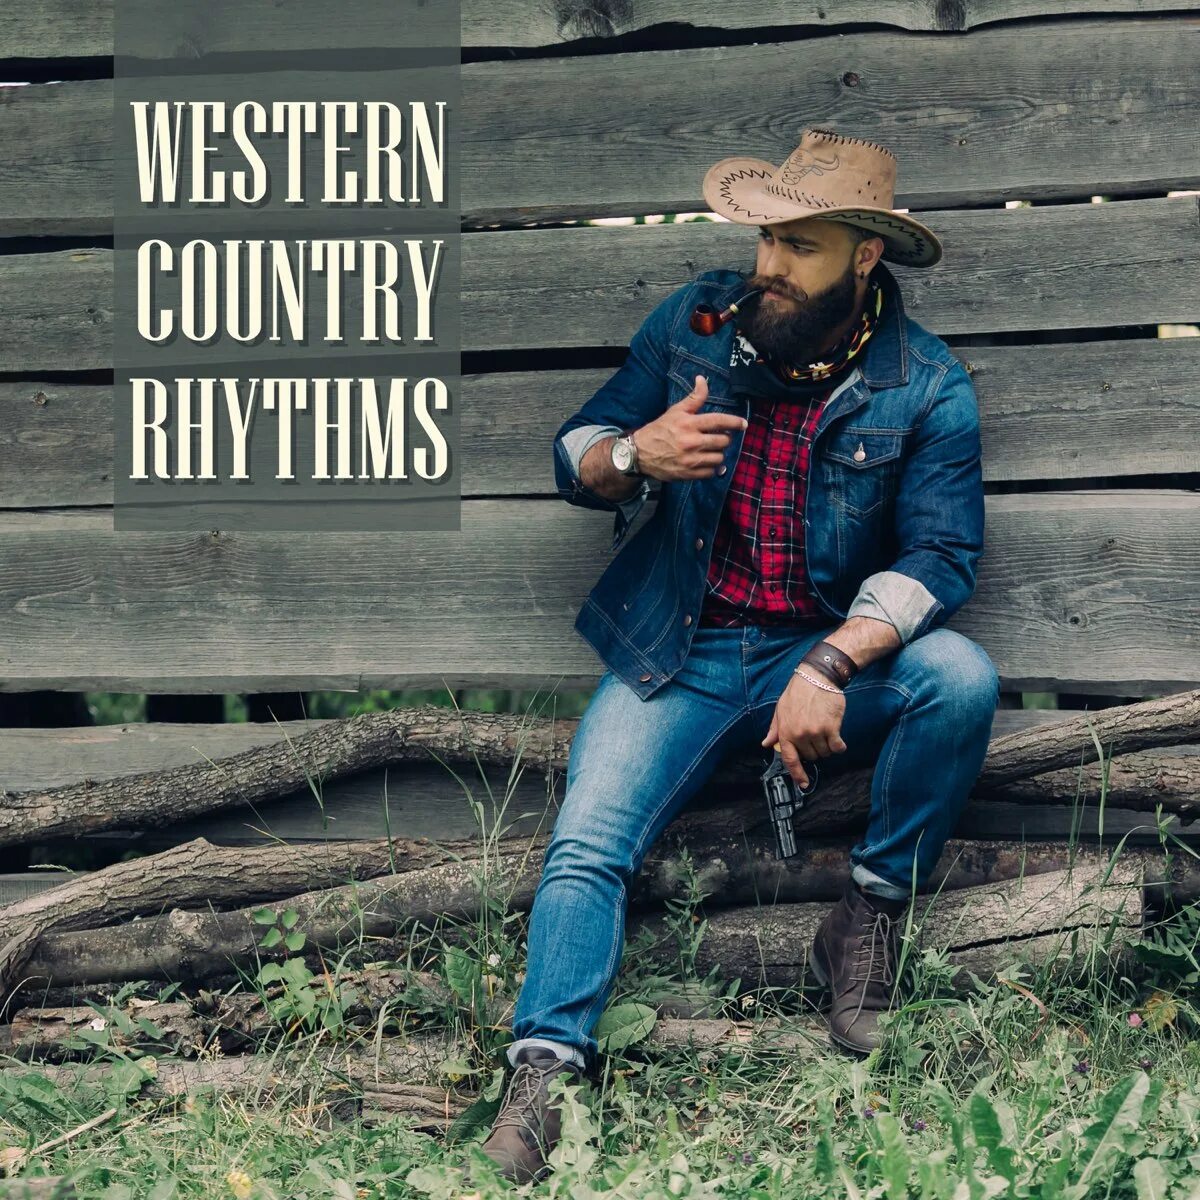 Country and western. Country Western Band. Western Countries. Техасский Кантри. Country and Western Music.